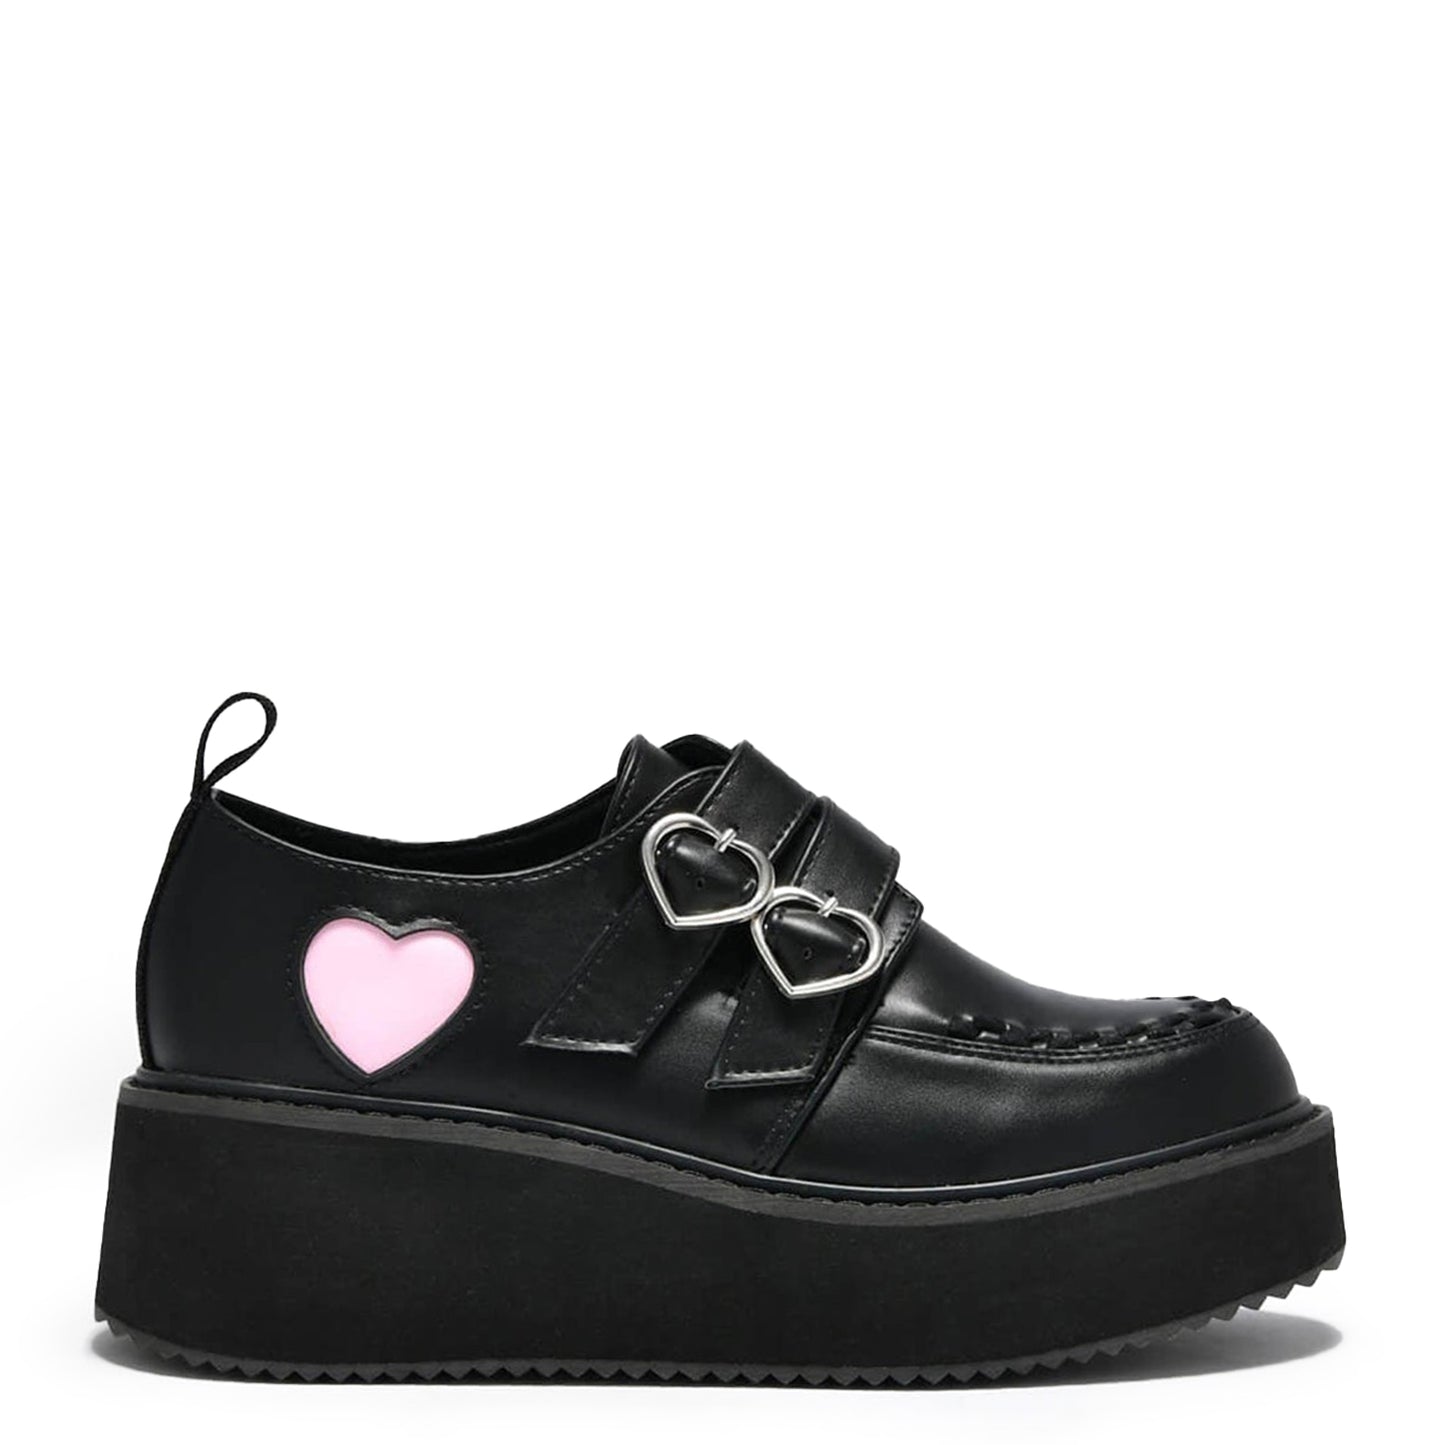 Pothos Pink Heart Wave Platform Shoes - Shoes - KOI Footwear - Black - Main View